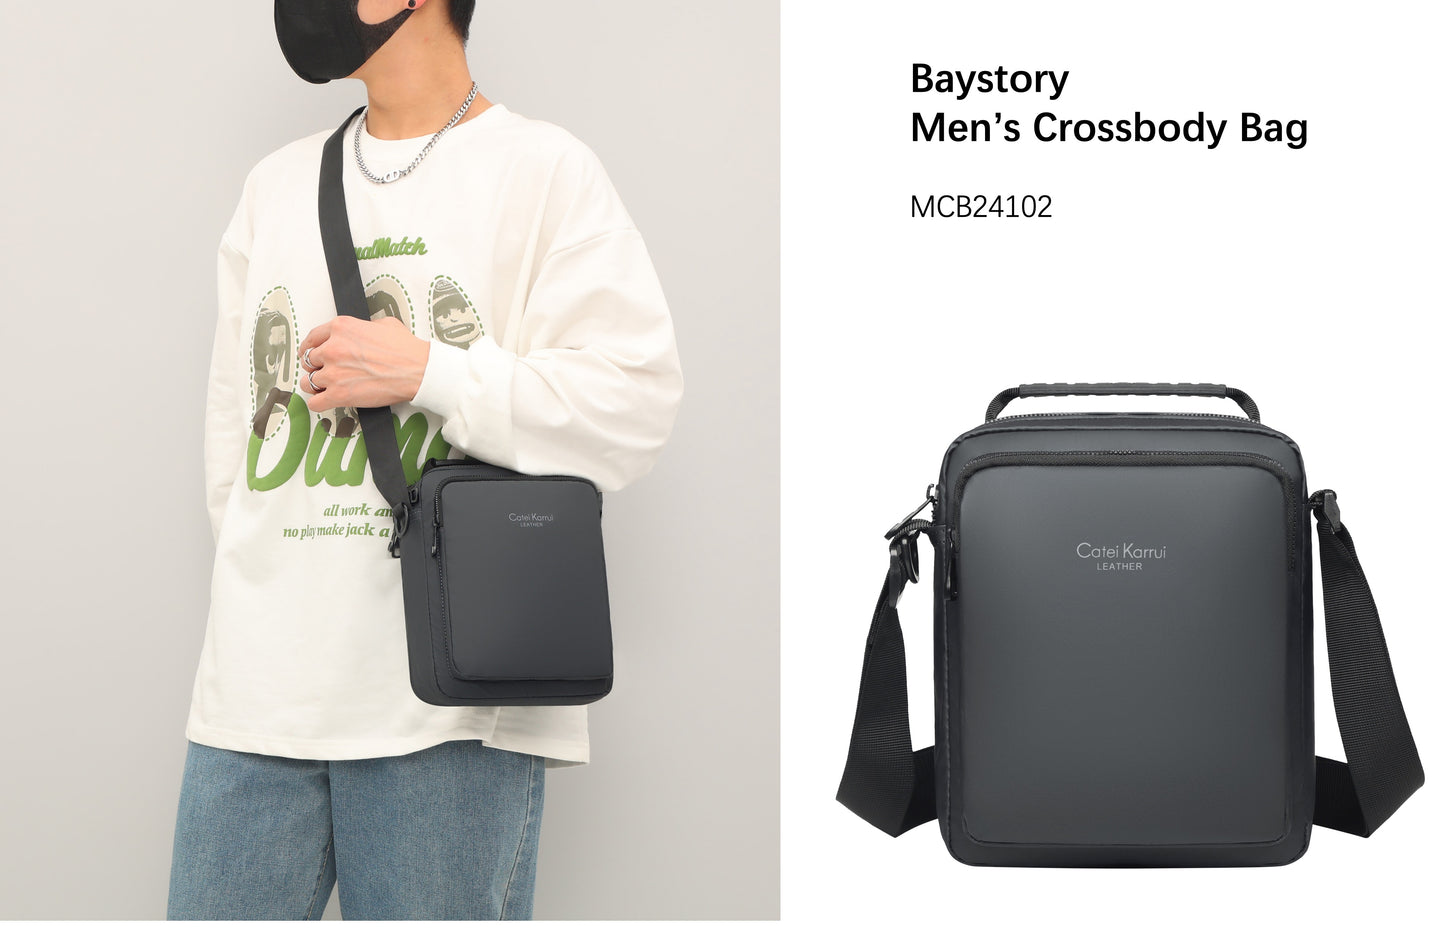 Baystory Men’s Crossbody Bag MCB24102 - Baystory